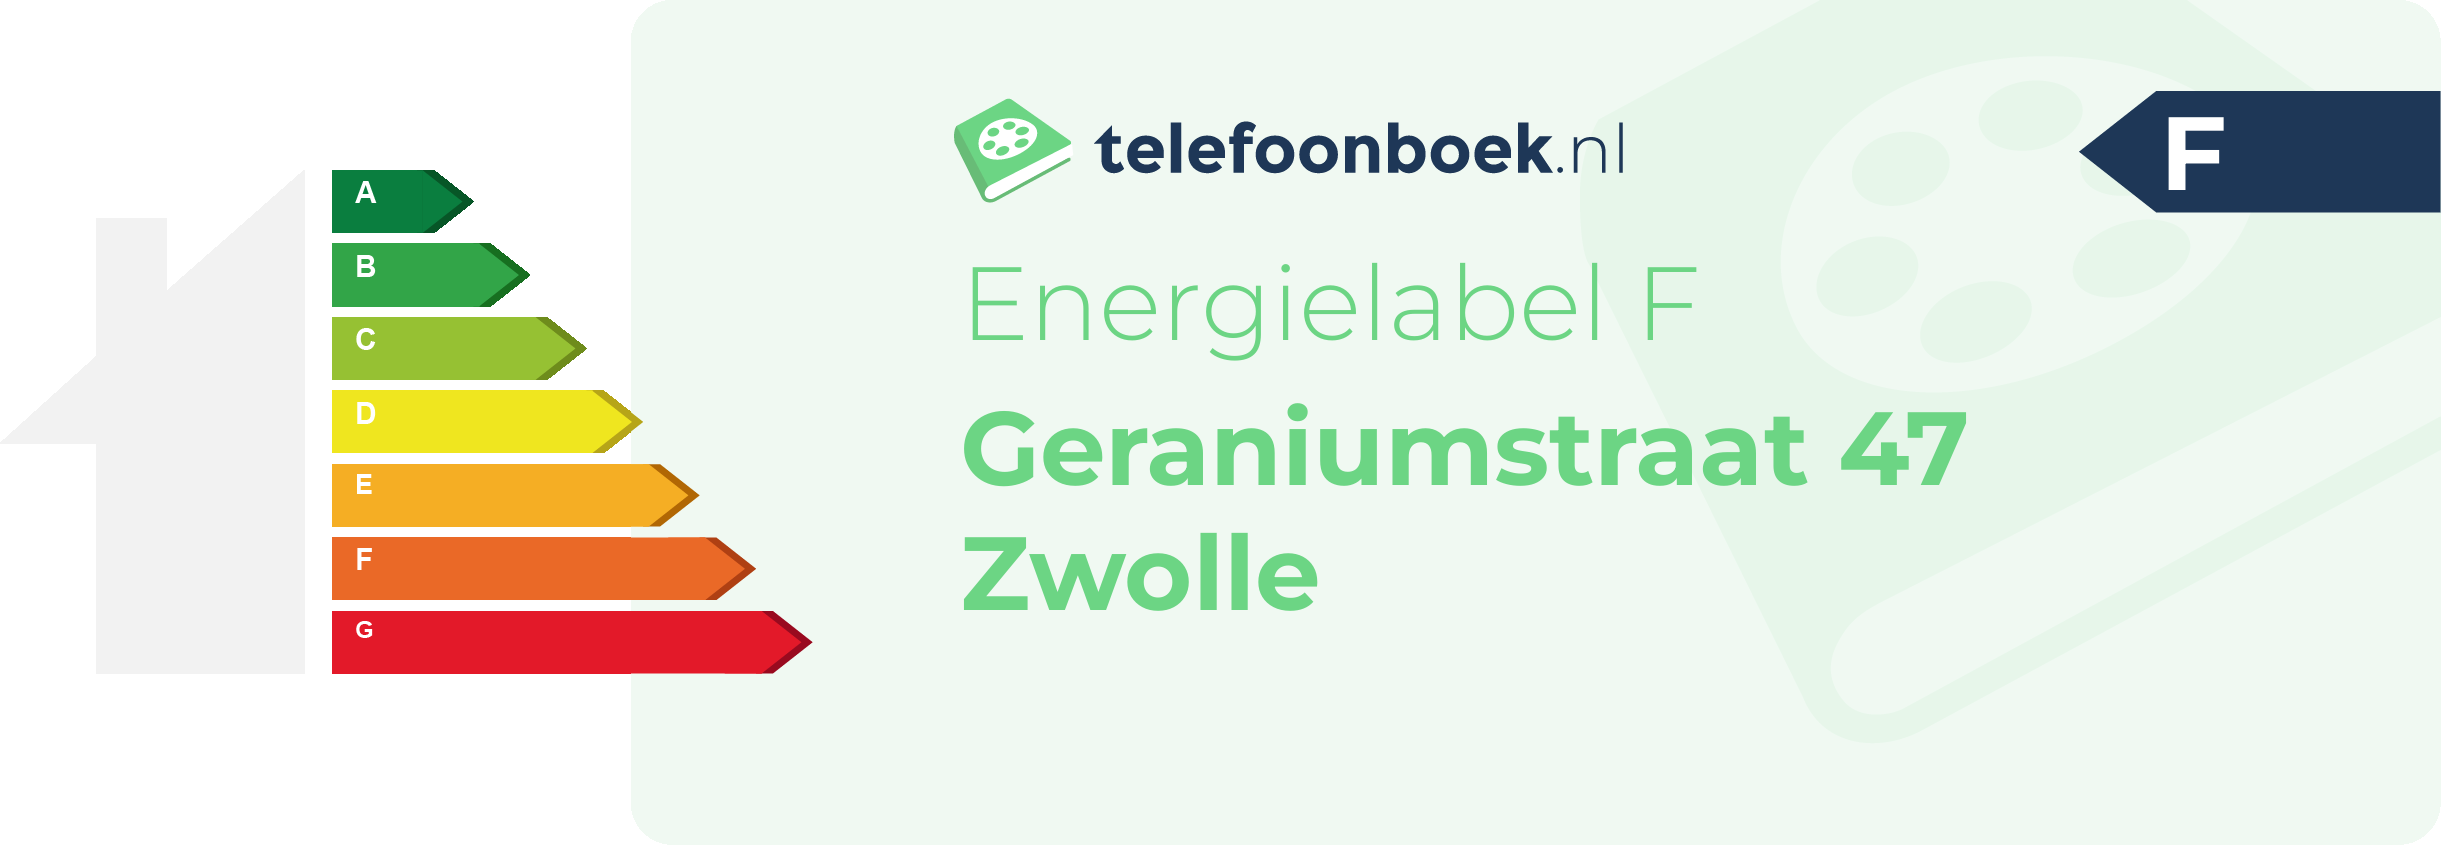 Energielabel Geraniumstraat 47 Zwolle